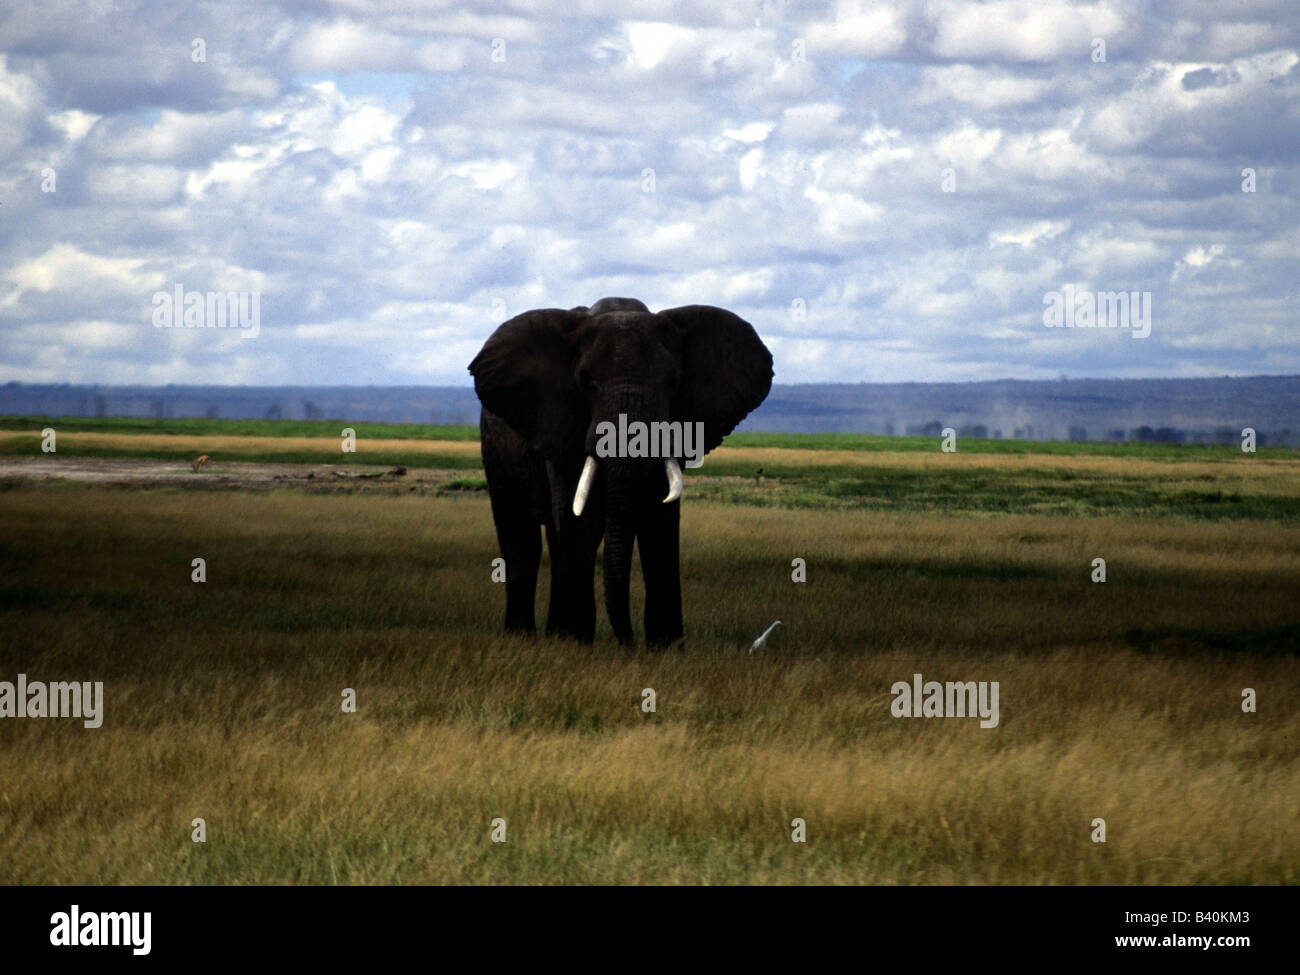 Zoologia / animali, mammifero / di mammifero, Elephantidae, Bush africano Elefante africano (Loxodonta africana), elefante nella steppa, Amboseli na Foto Stock